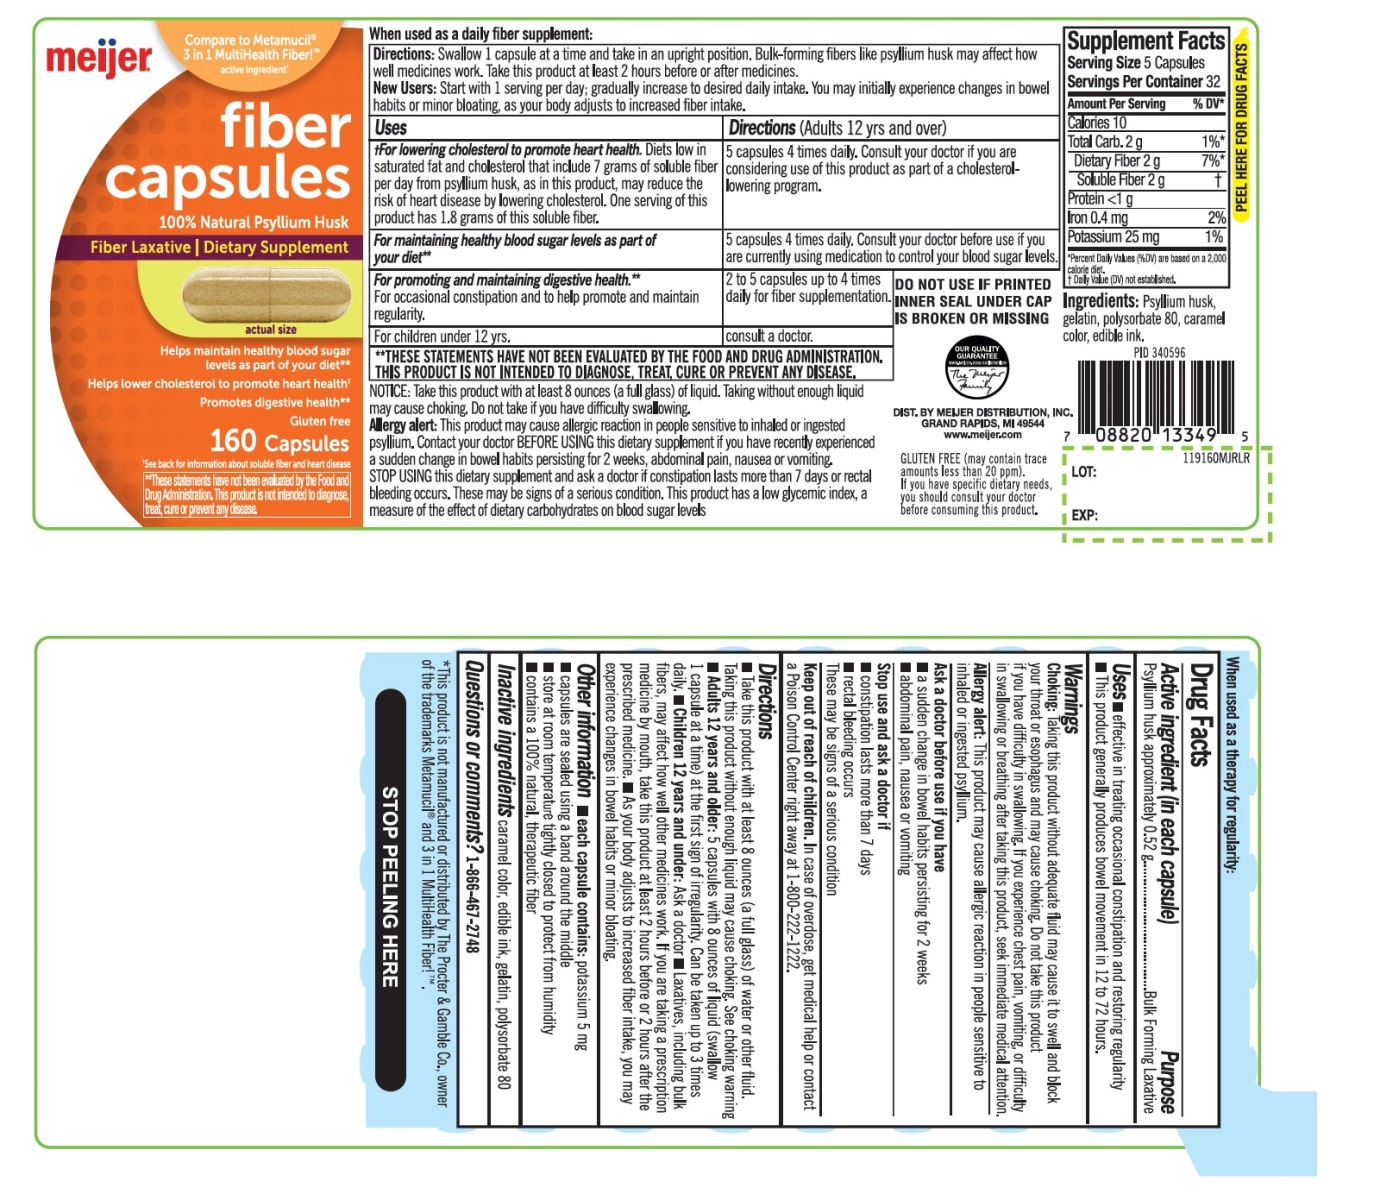 meijer fiber capsules 160 counts